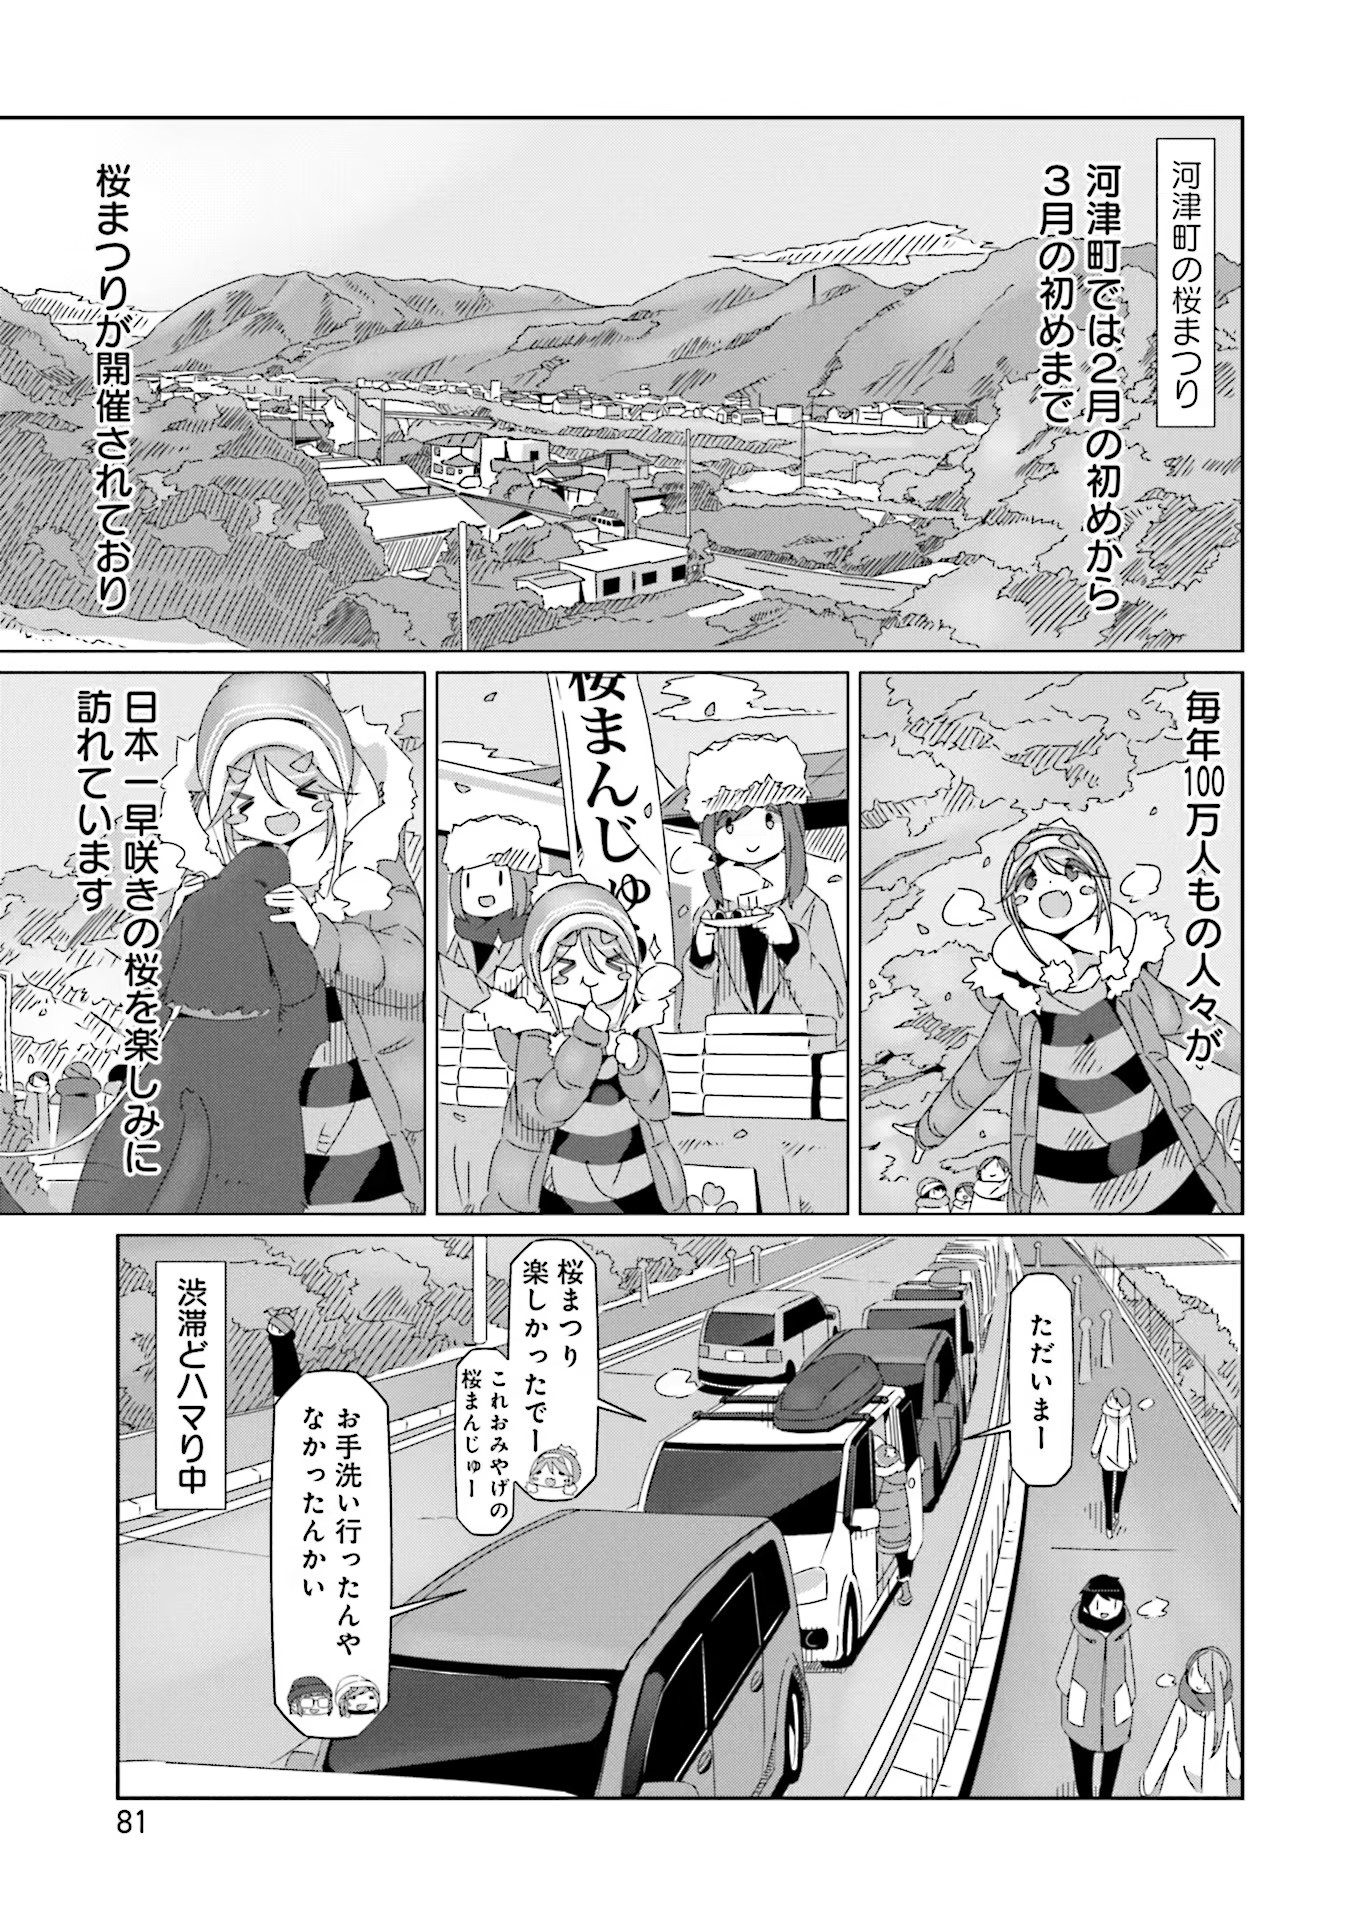 Yuru Camp - Chapter 44 - Page 1